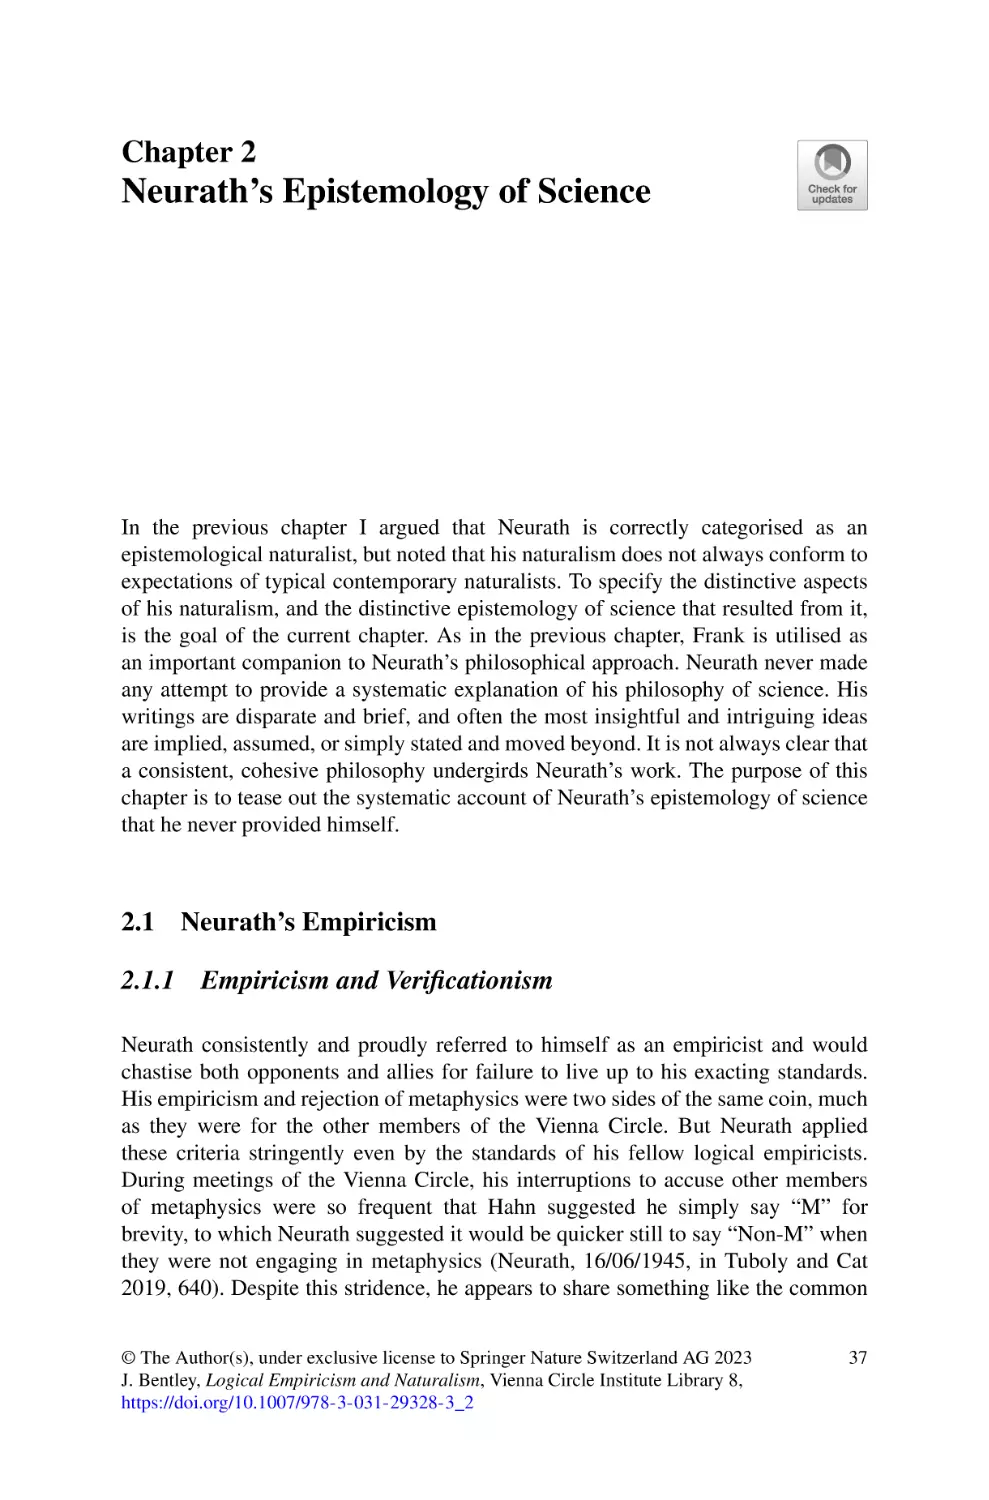 2 Neurath's Epistemology of Science
2.1 Neurath's Empiricism
2.1.1 Empiricism and Verificationism